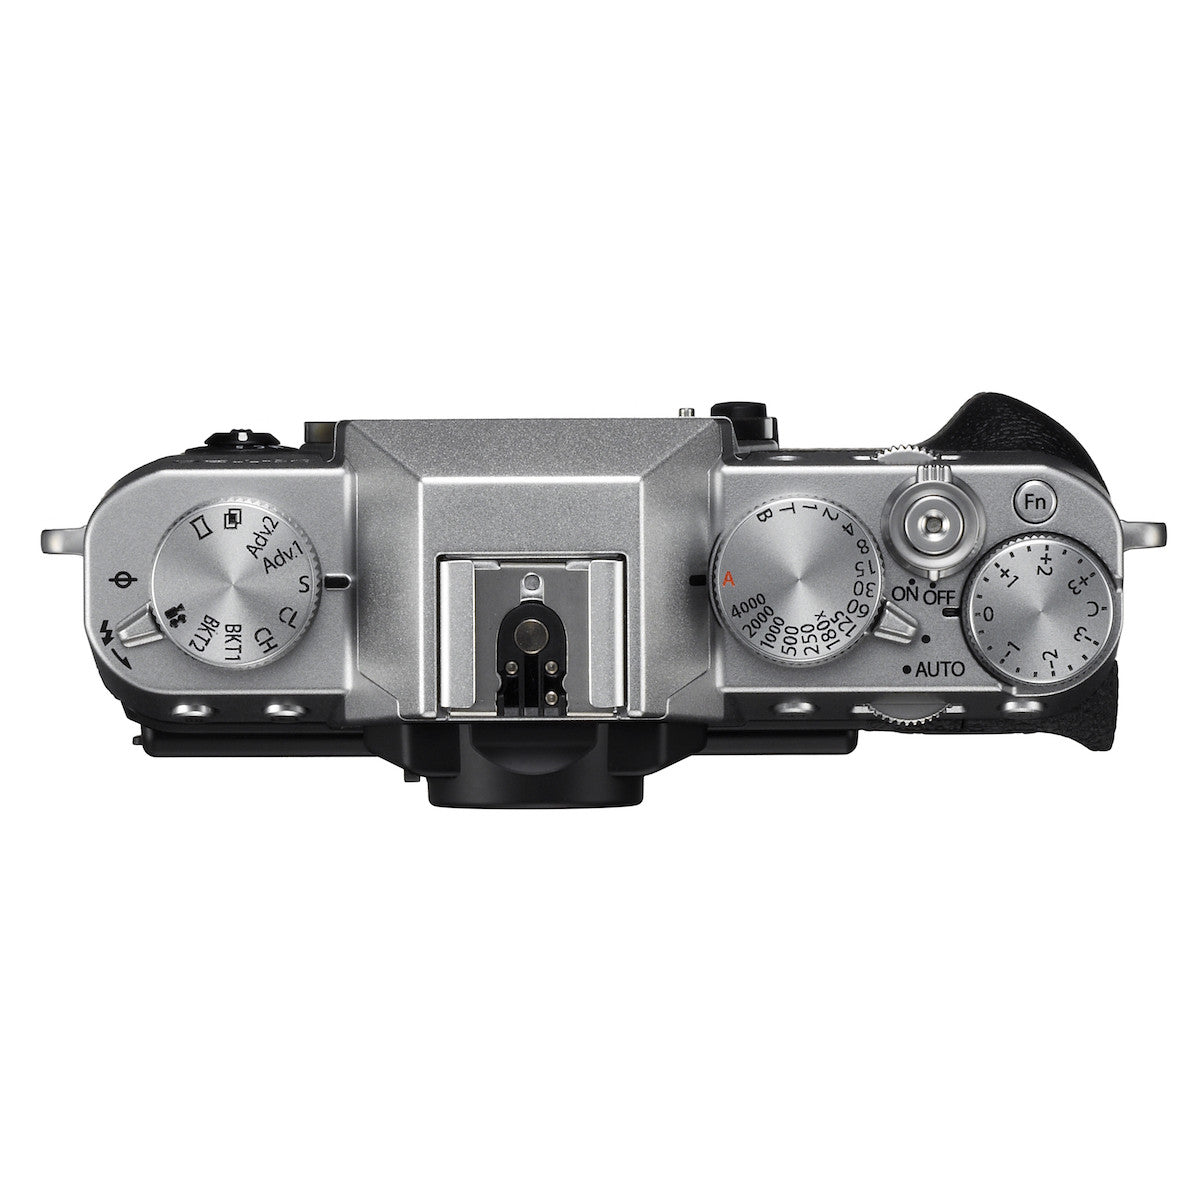 Fujifilm X-T20 Body with XC 16-50mm Lens Kit (Silver), camera mirrorless cameras, Fujifilm - Pictureline  - 3